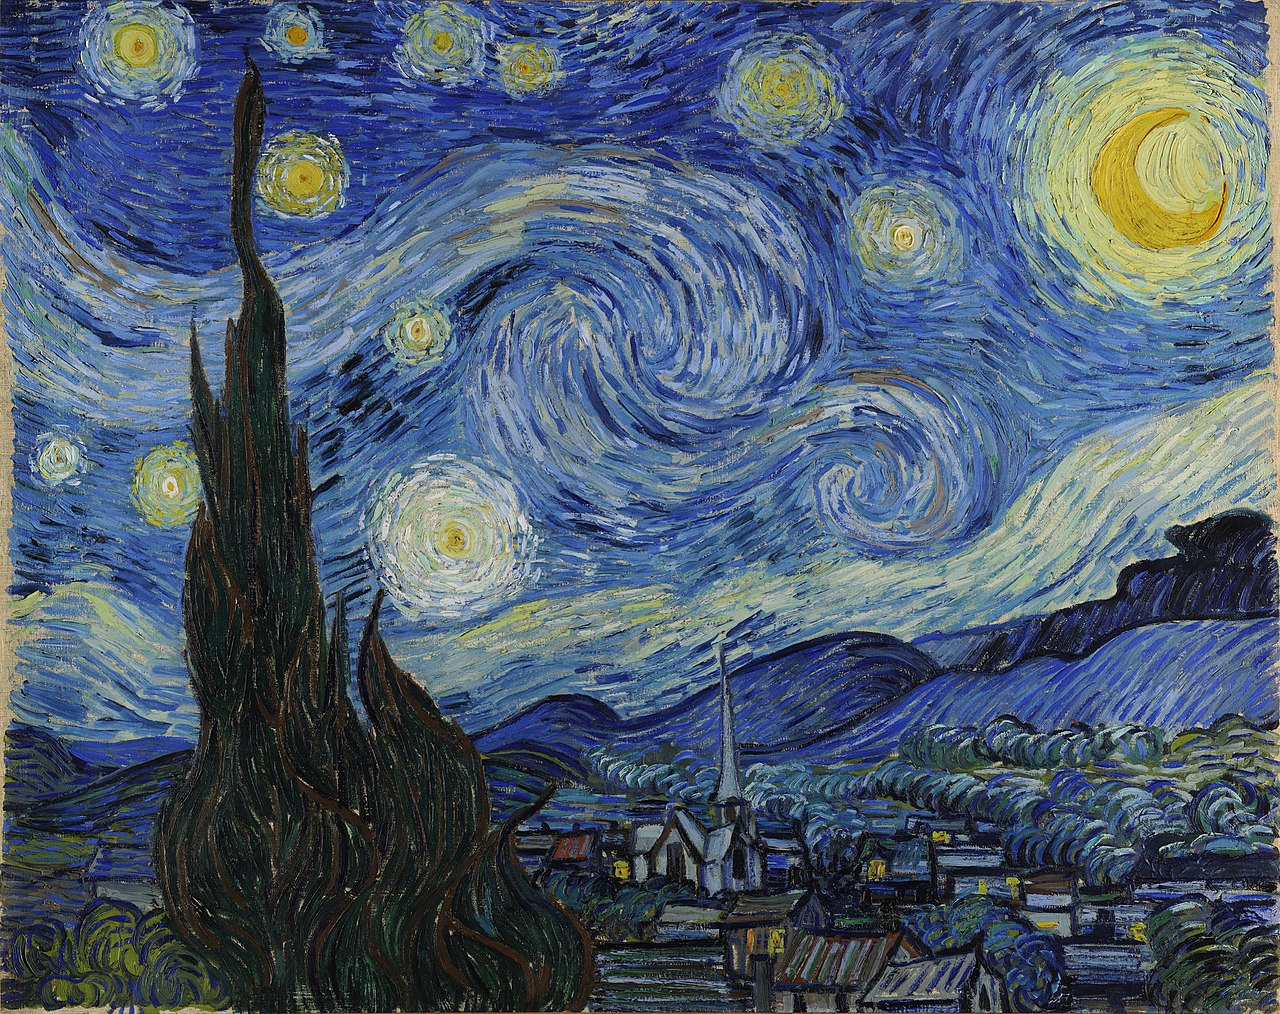 Starry Night, painting by Van Gogh